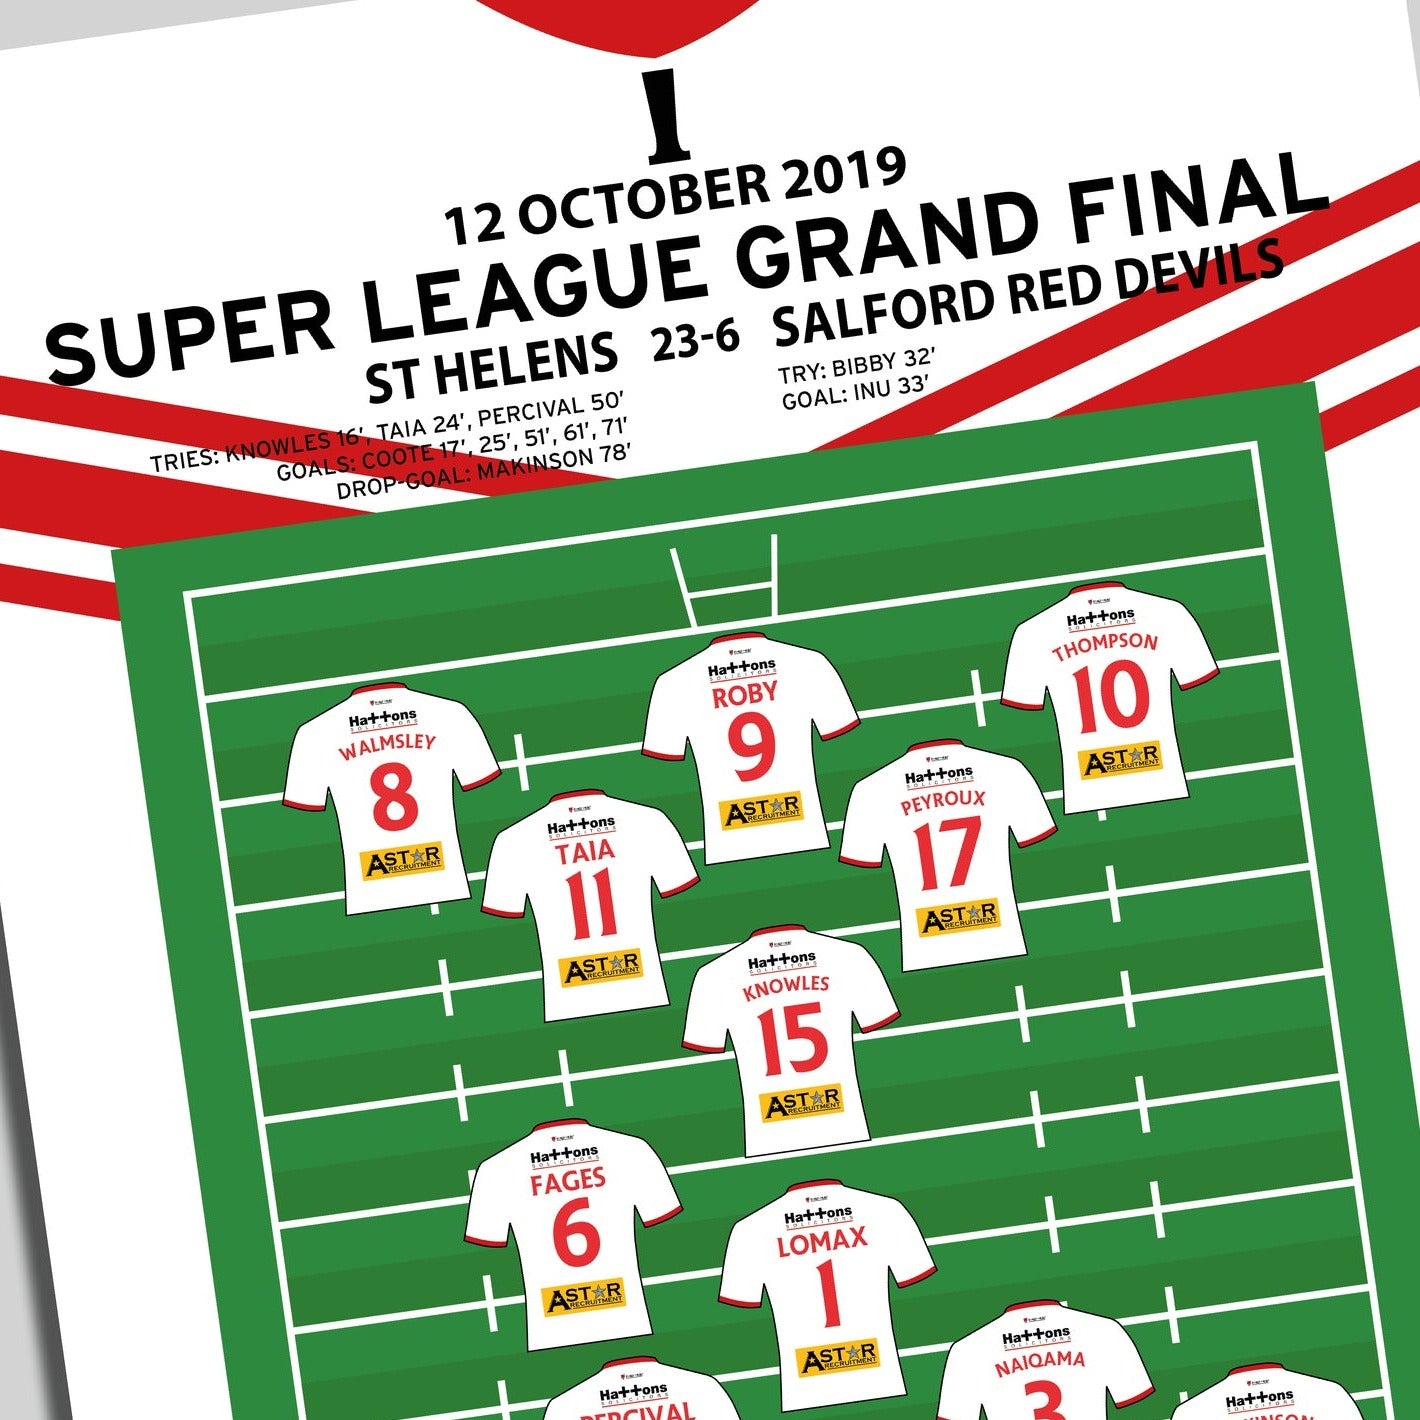 St Helens 23-6 Salford Red Devils - Super League Grand Final 2019